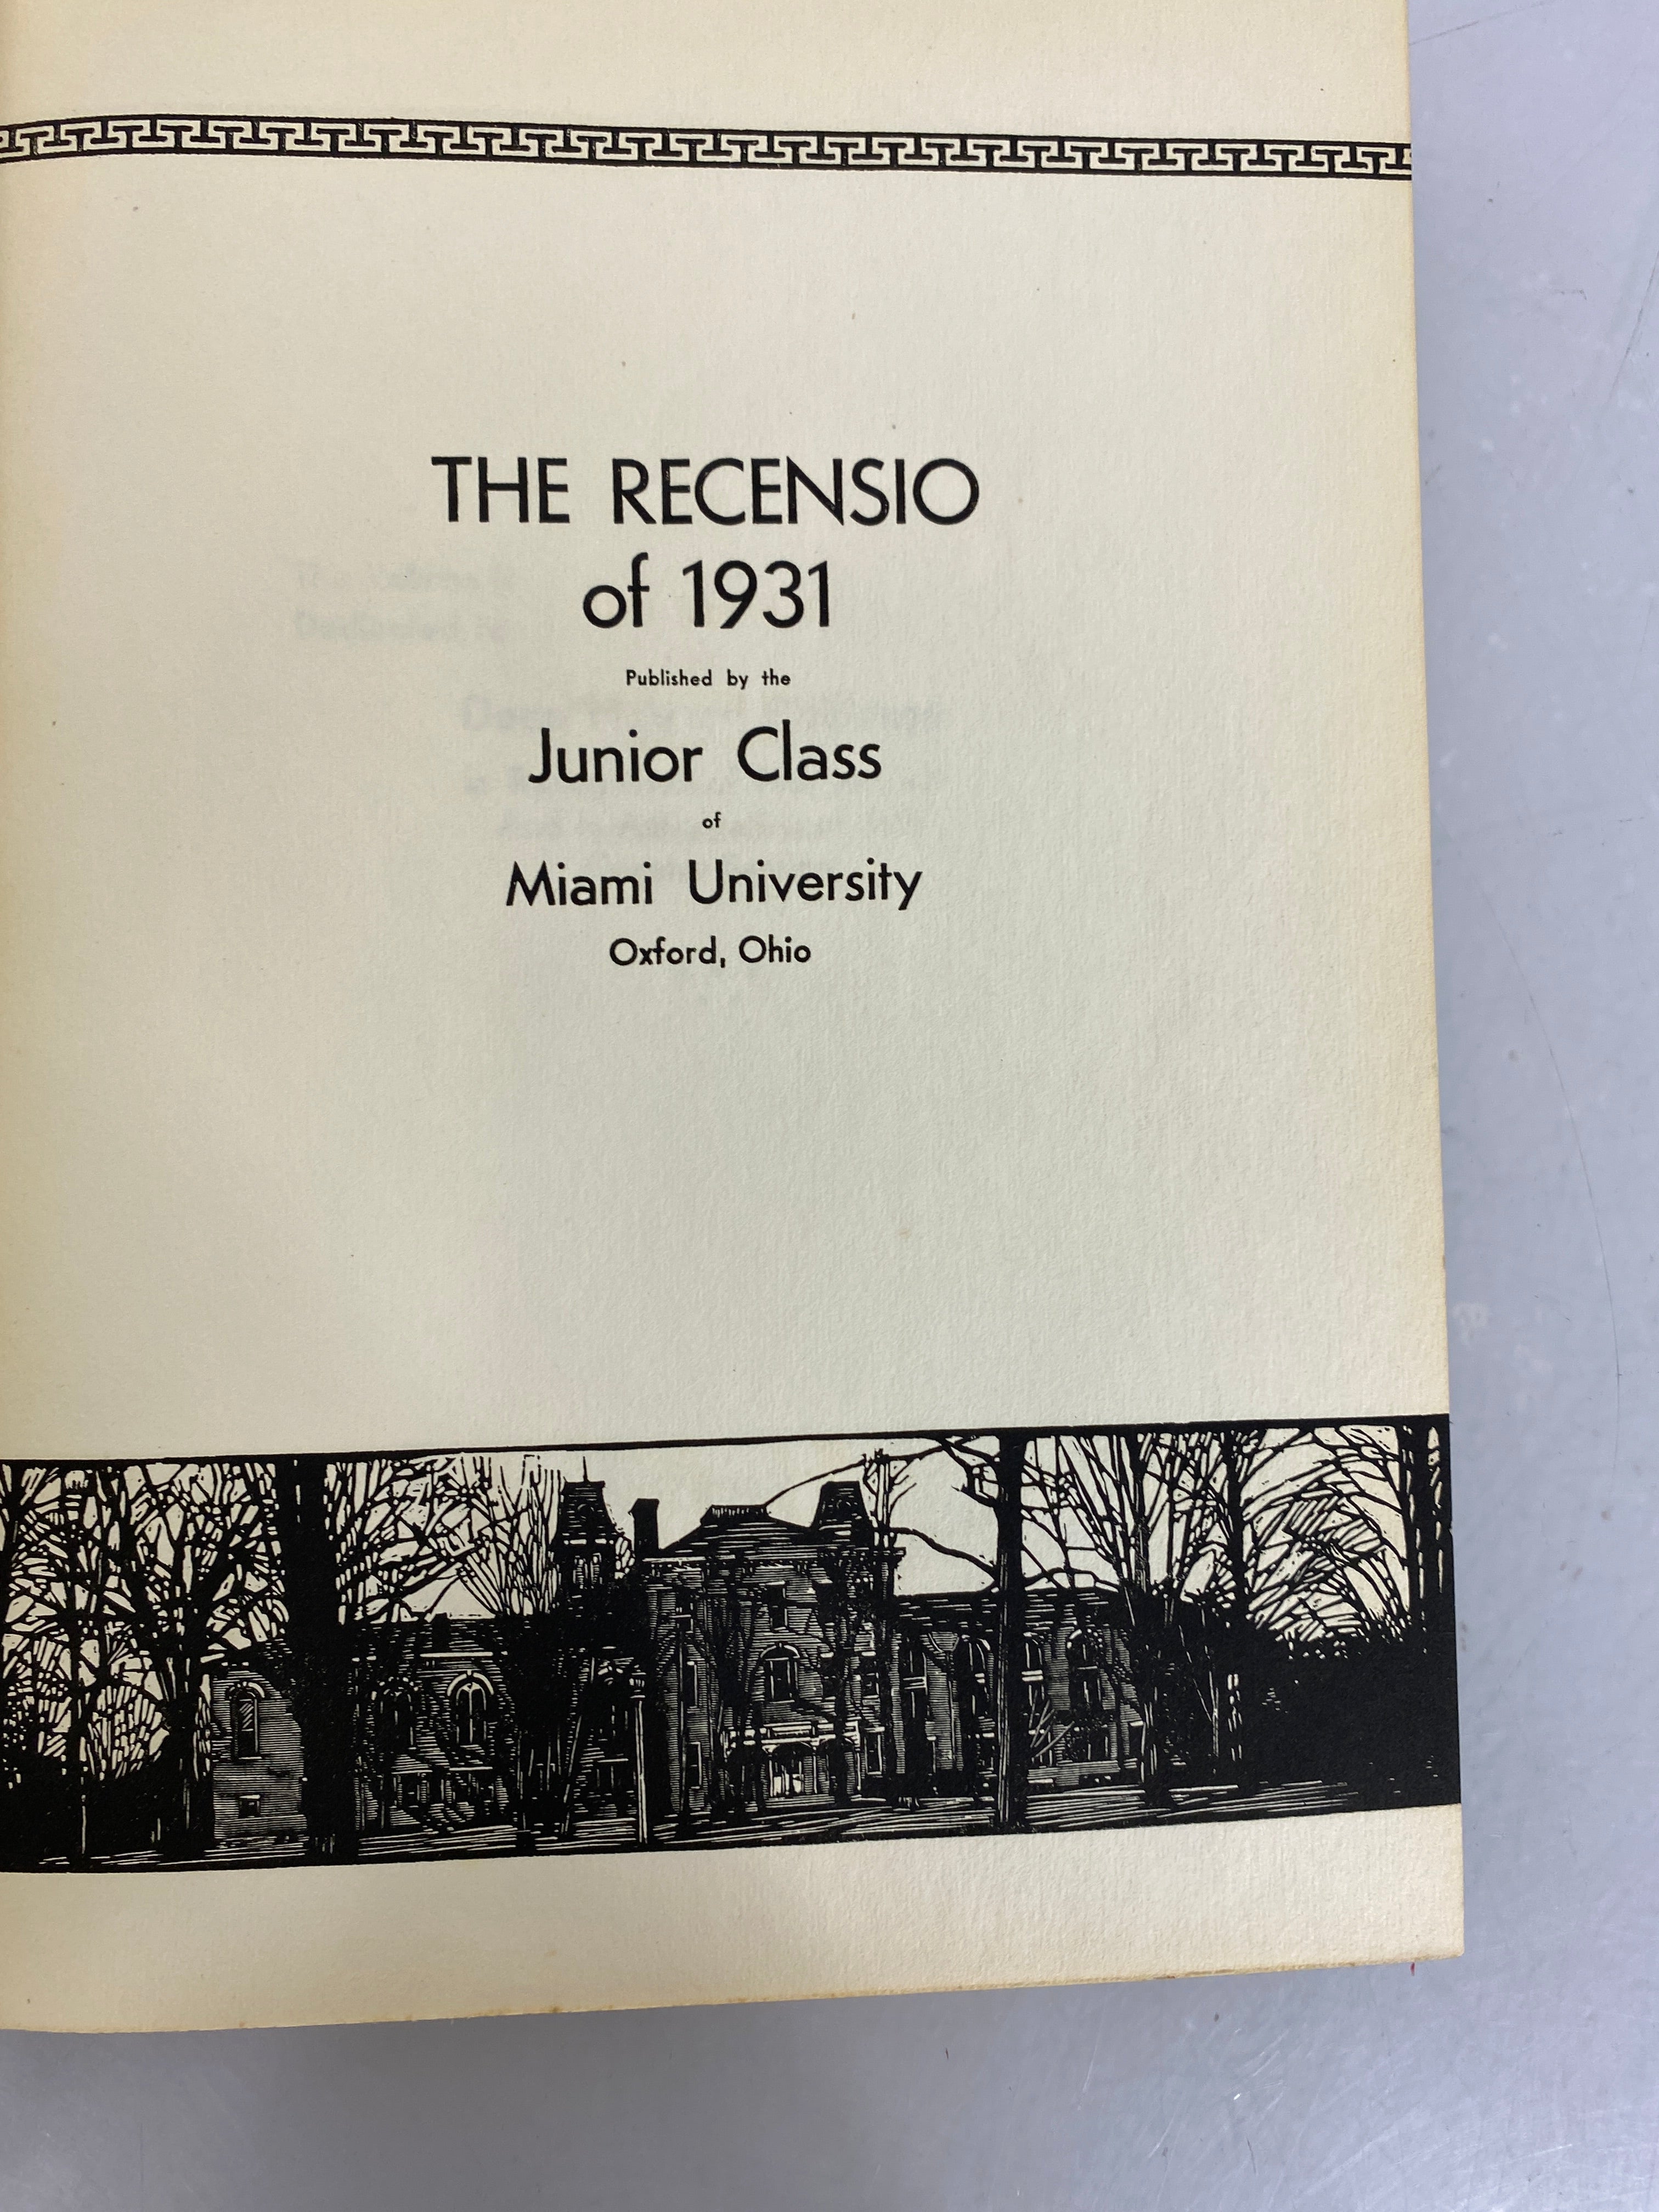 1931 Miami University "Recensio" Oxford Ohio